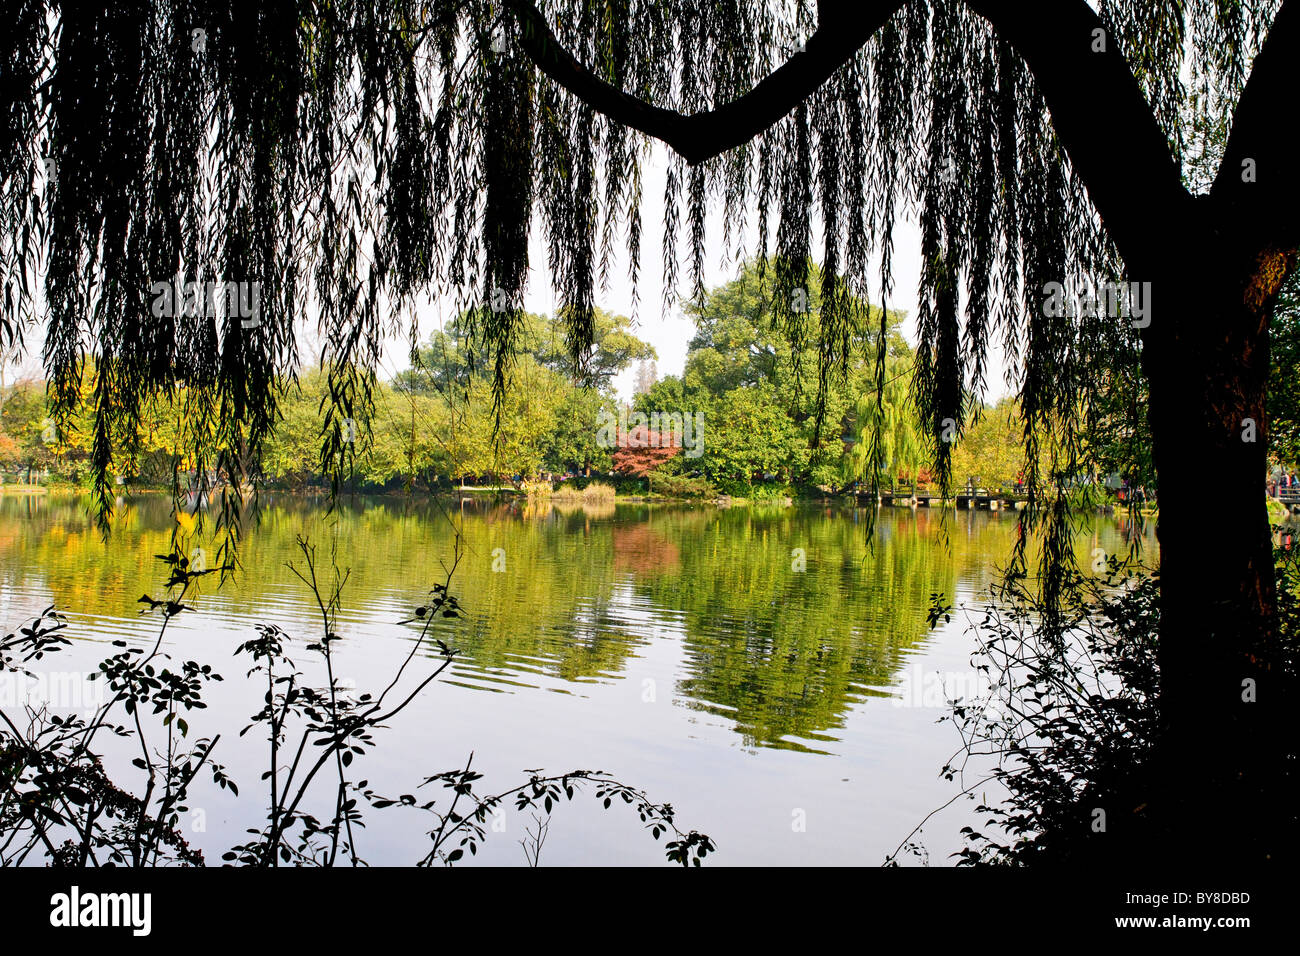 Scenery from the West Lake i  Hangzhou China Stock Photo